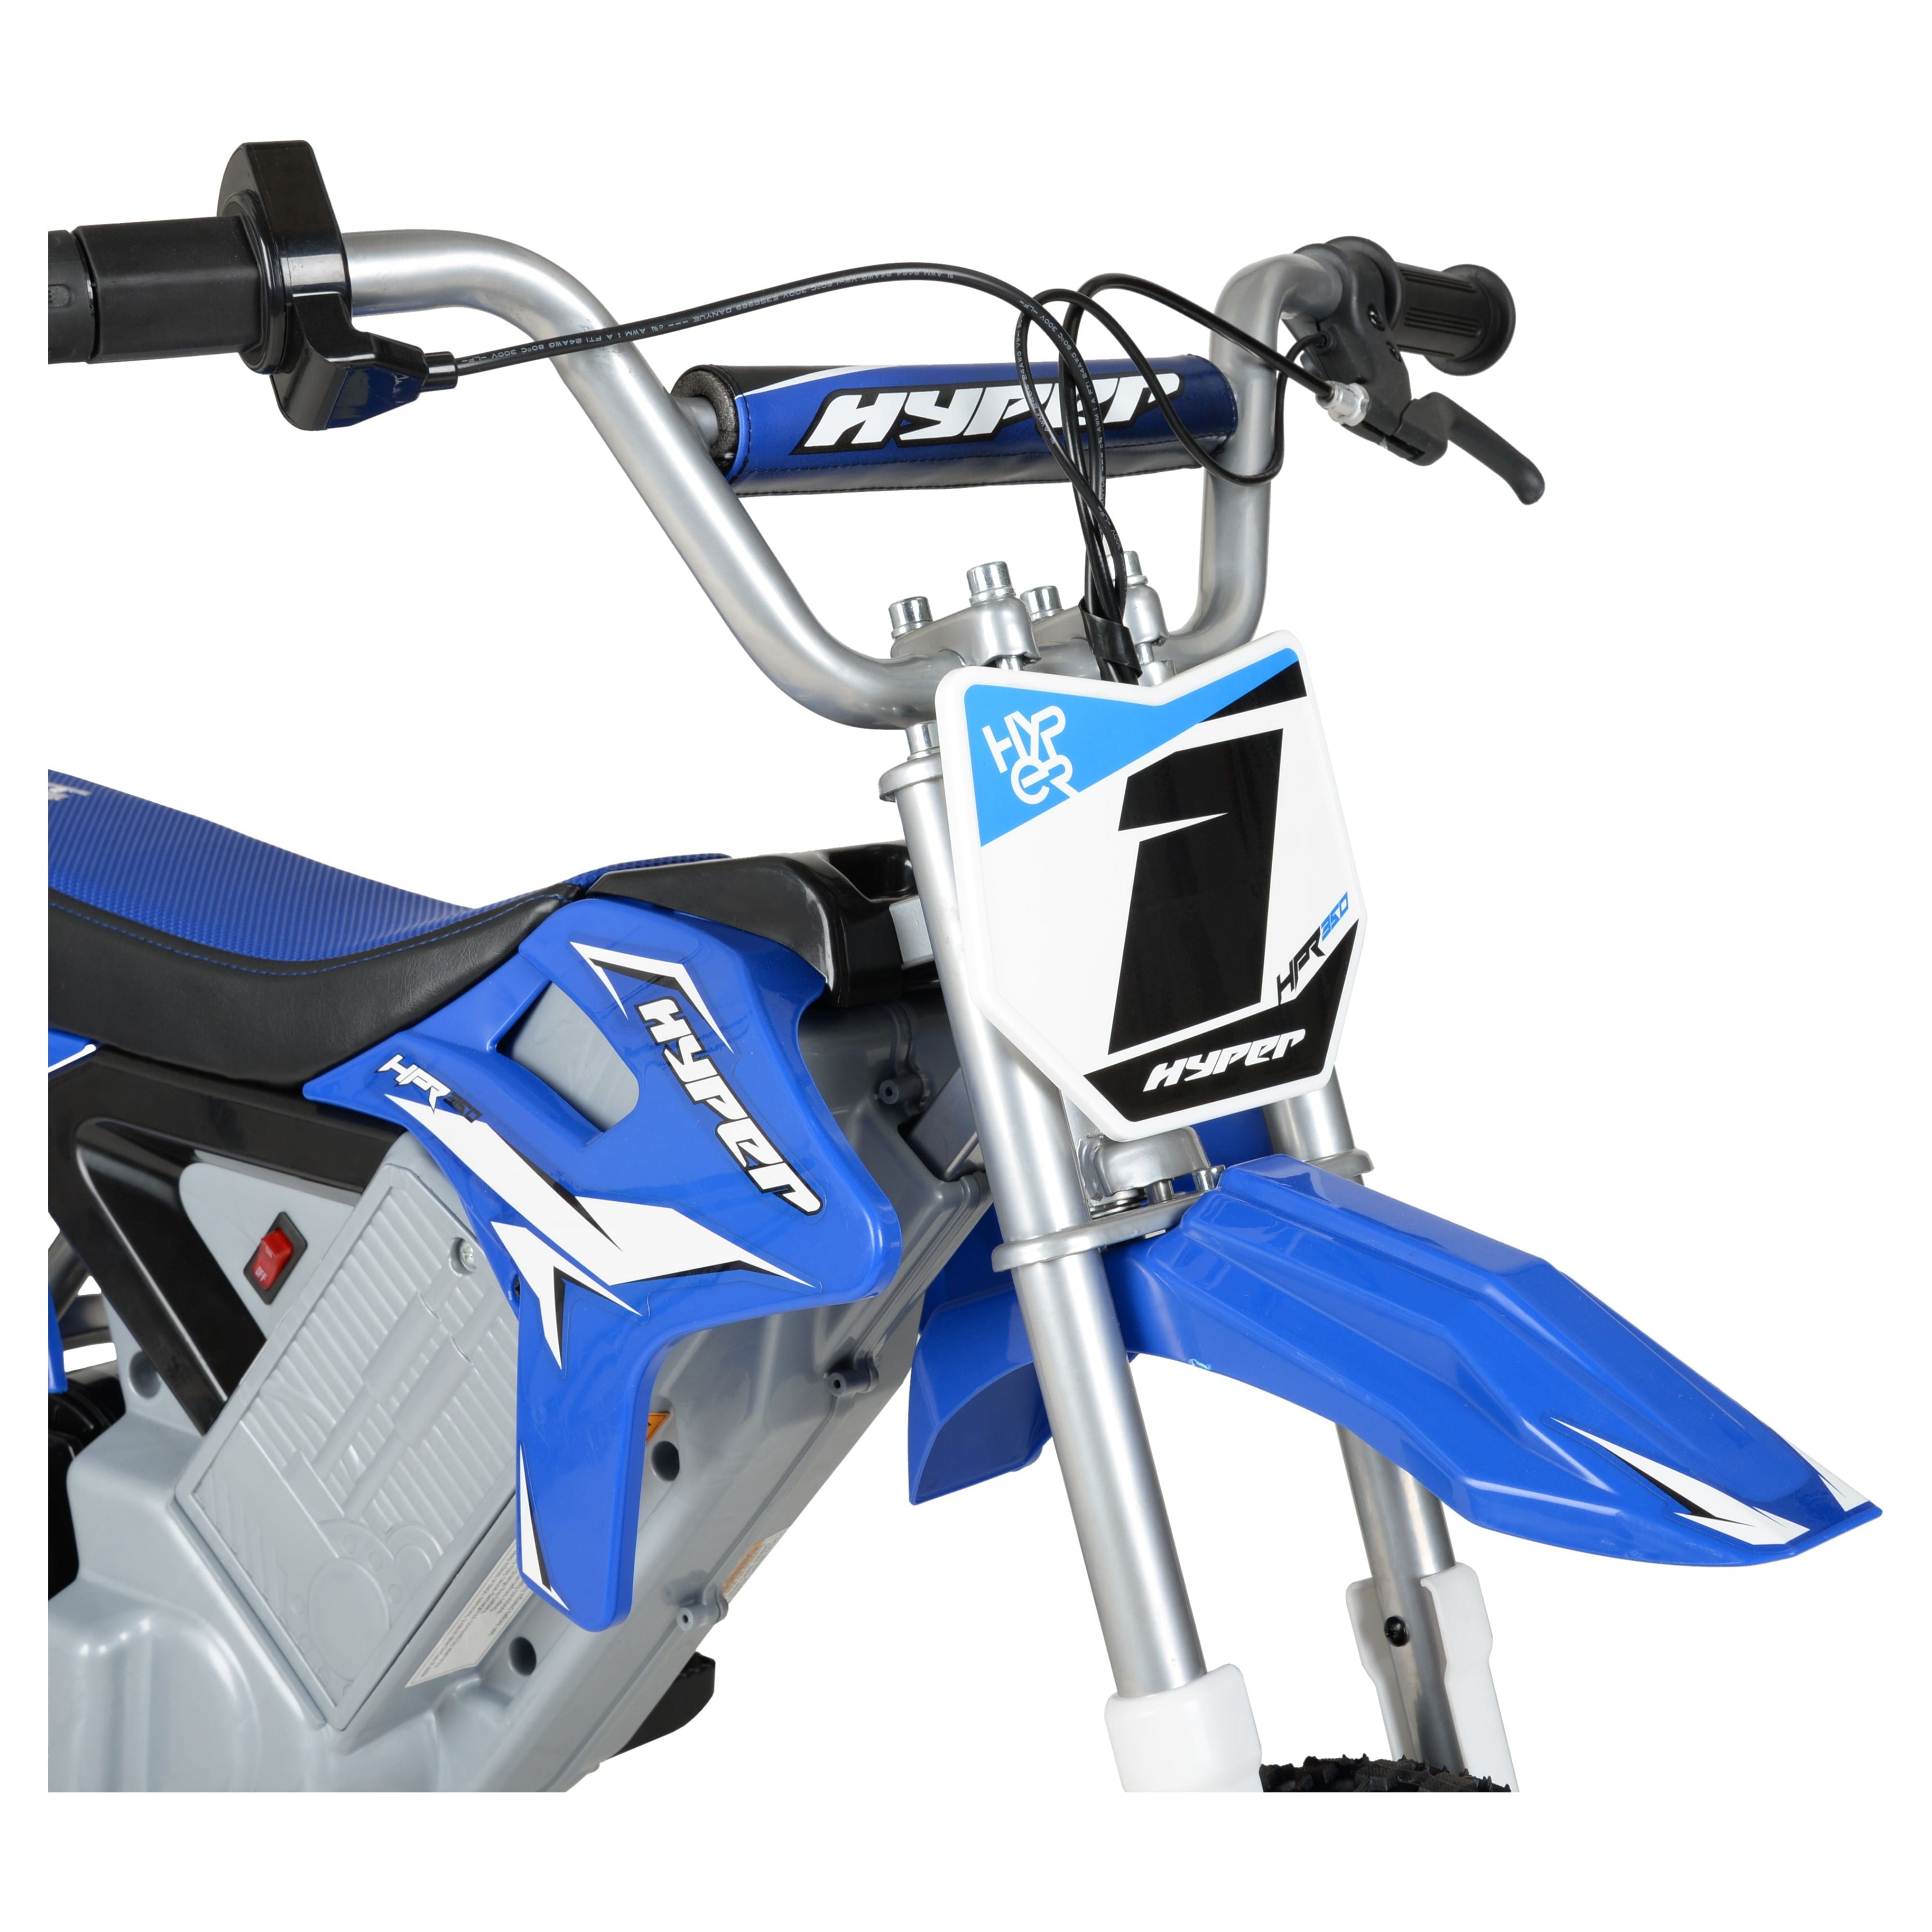 Hyper HPR 350 Dirt Bike 24-volt Electric Motorcycle-Blue